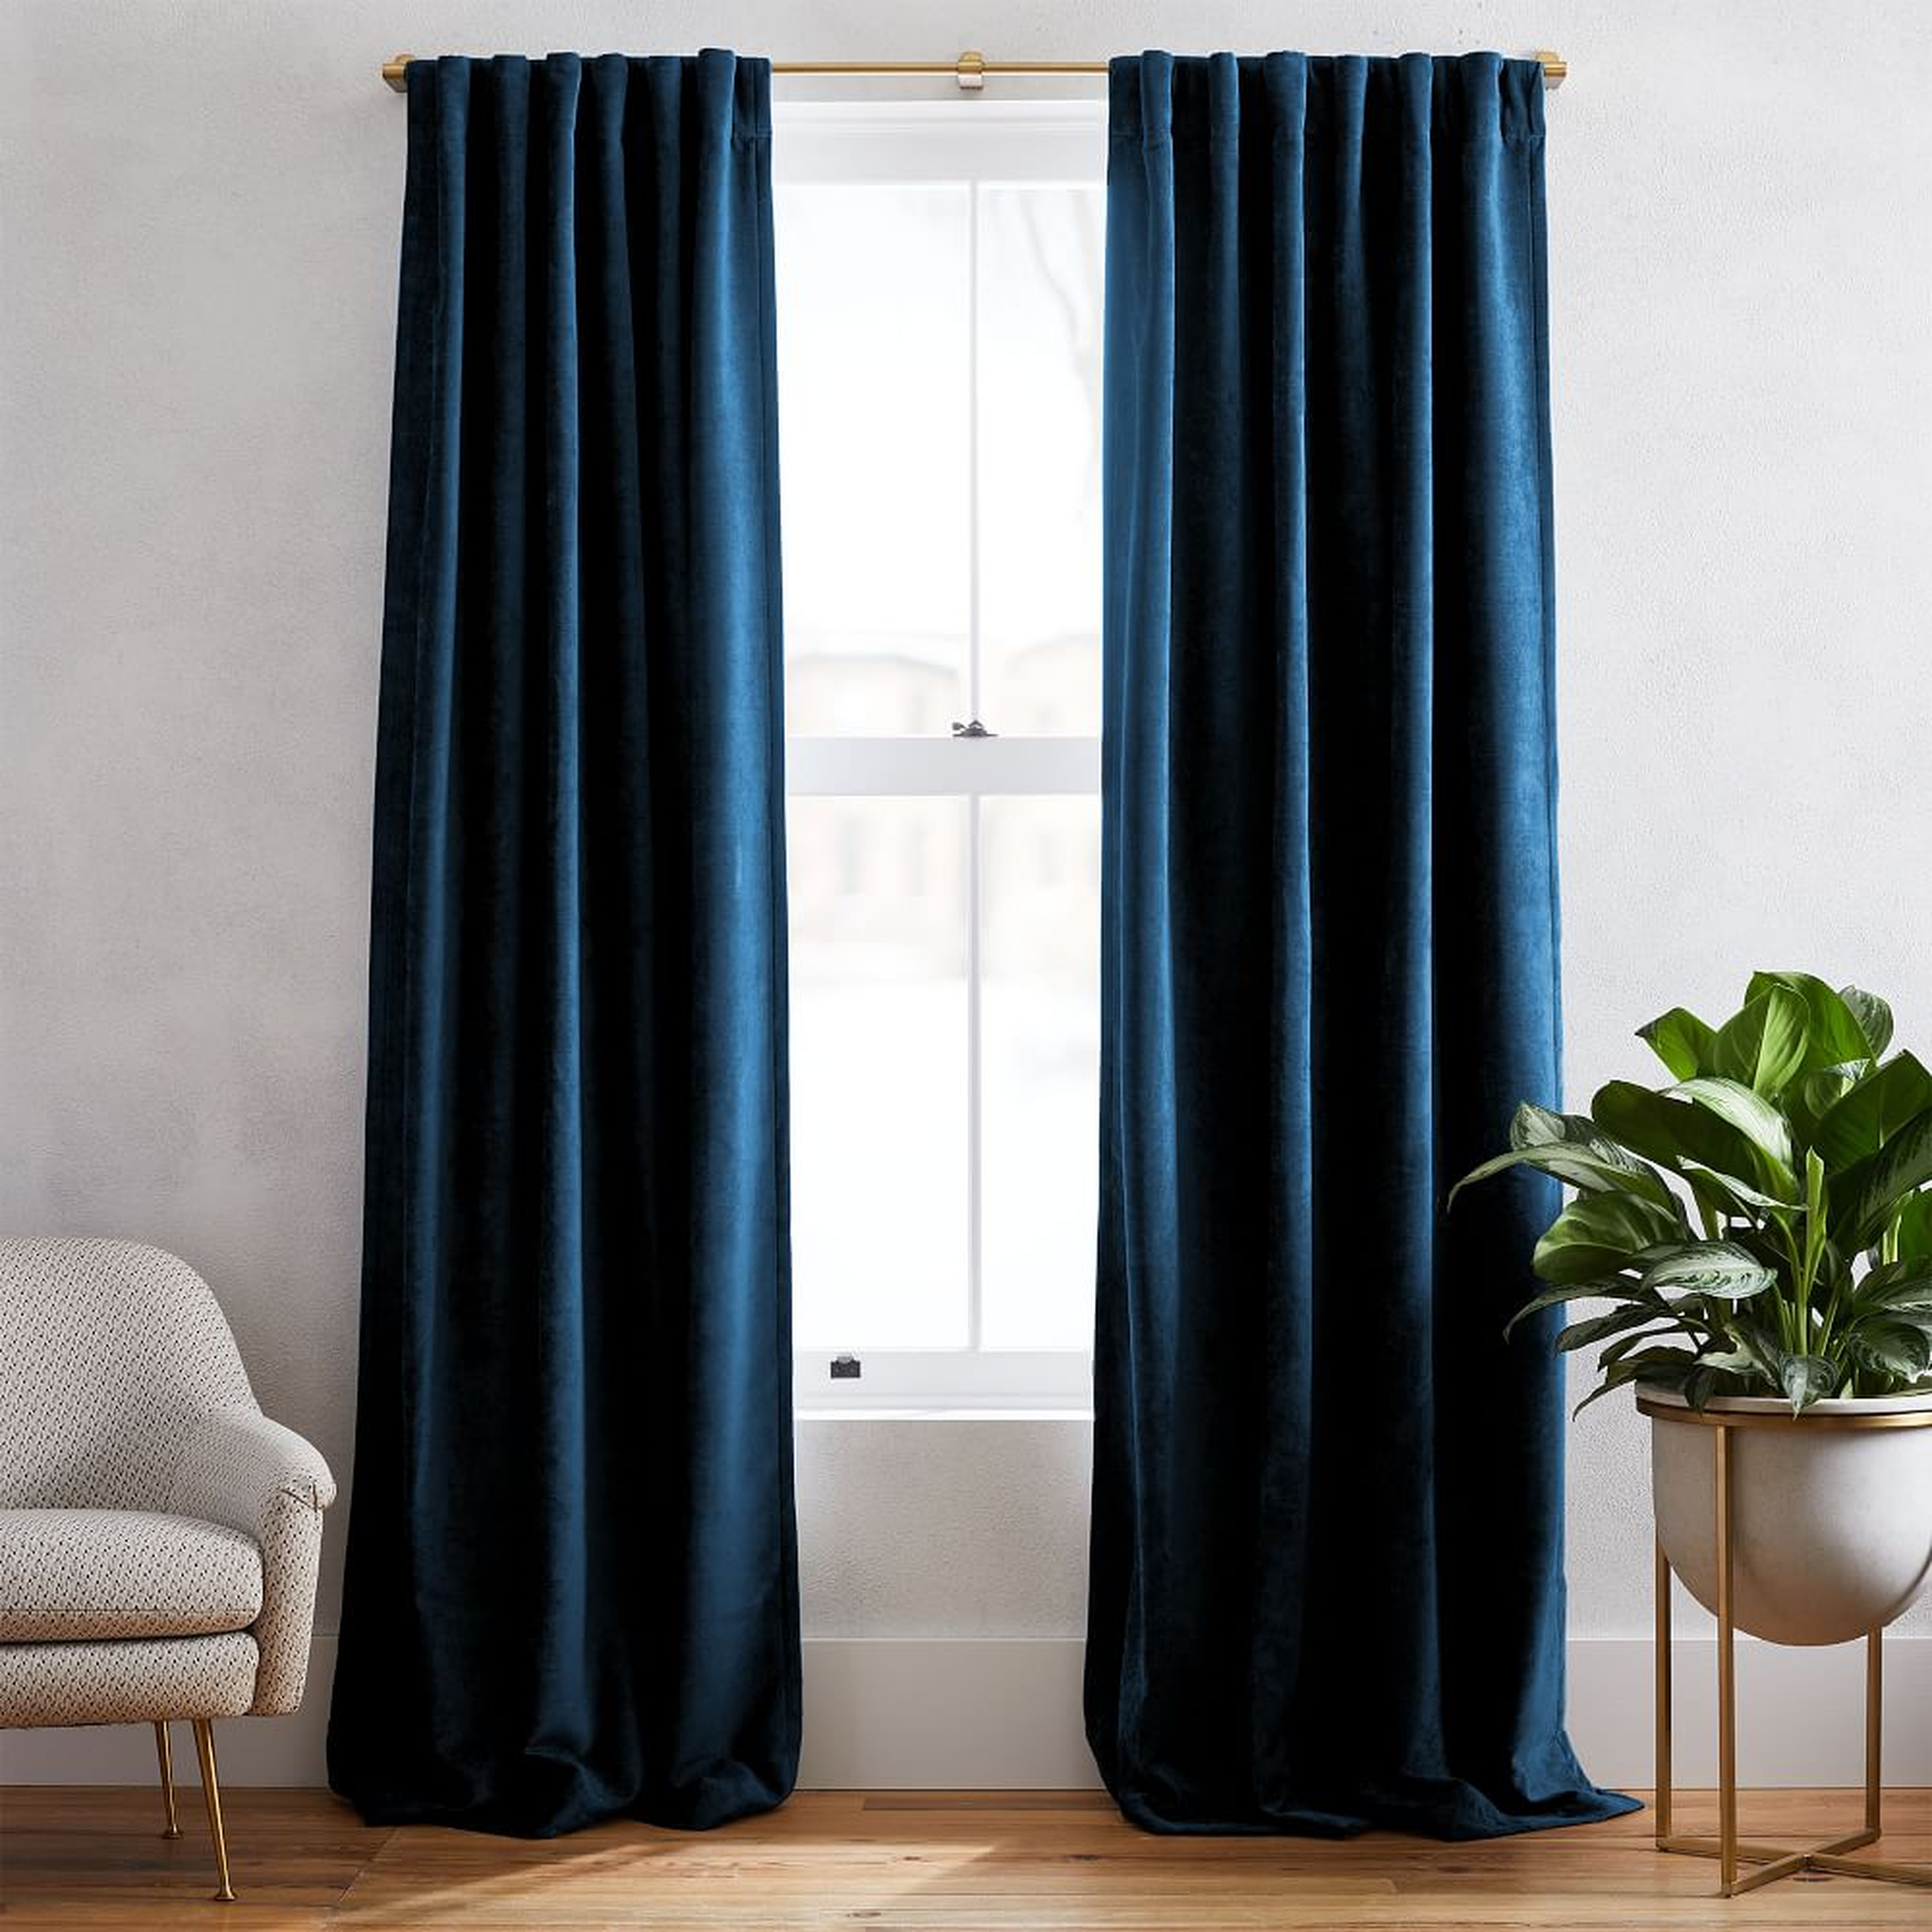 Worn Velvet Curtain with Blackout Lining, Regal Blue, 48"x96", Set of 2 - West Elm